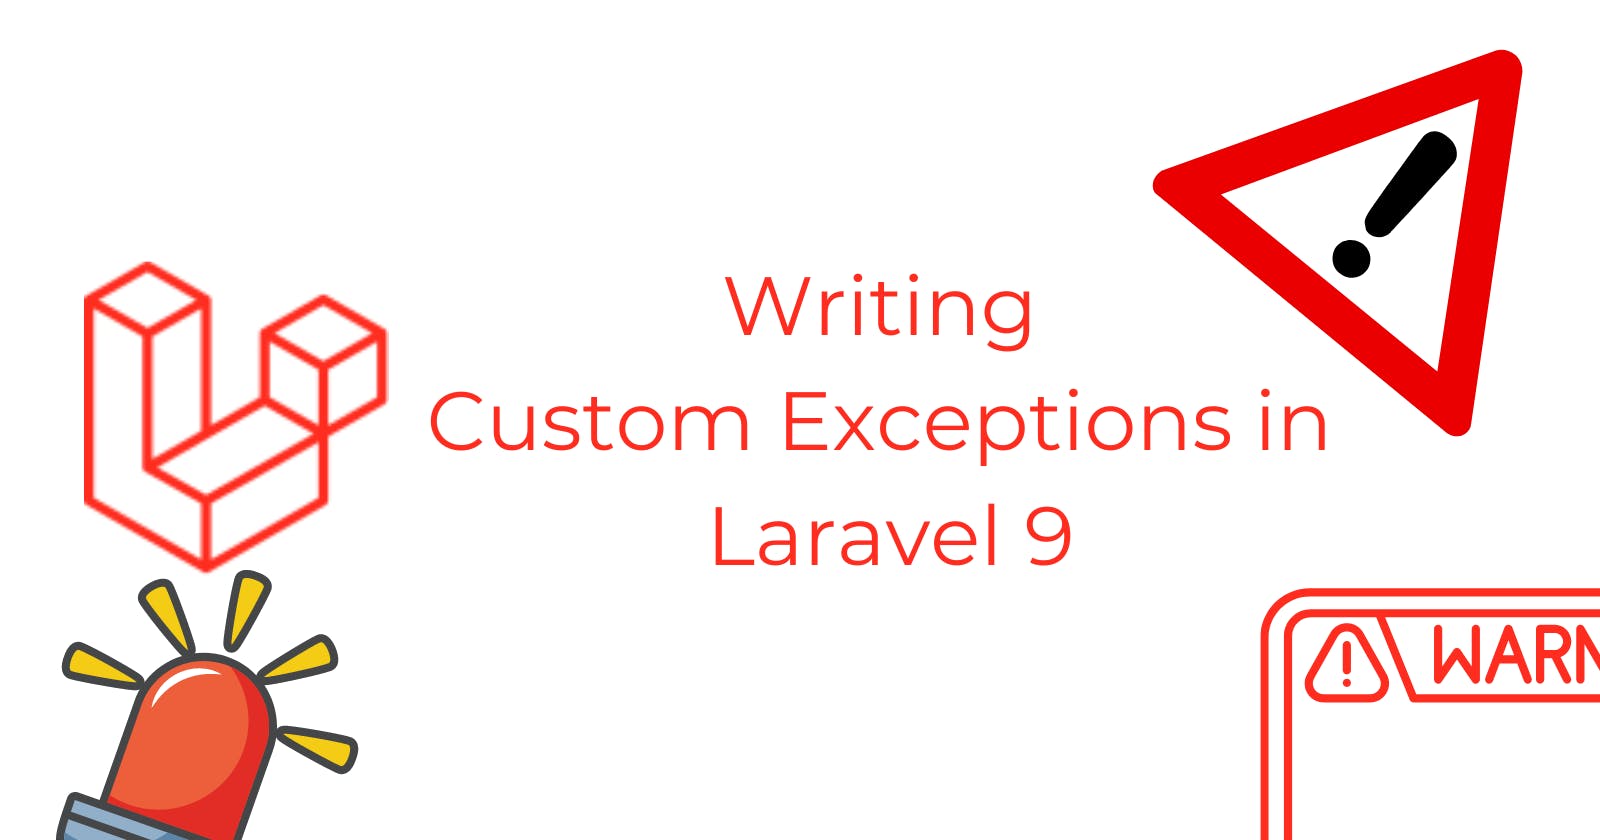 Writing Custom Exceptions in Laravel 9